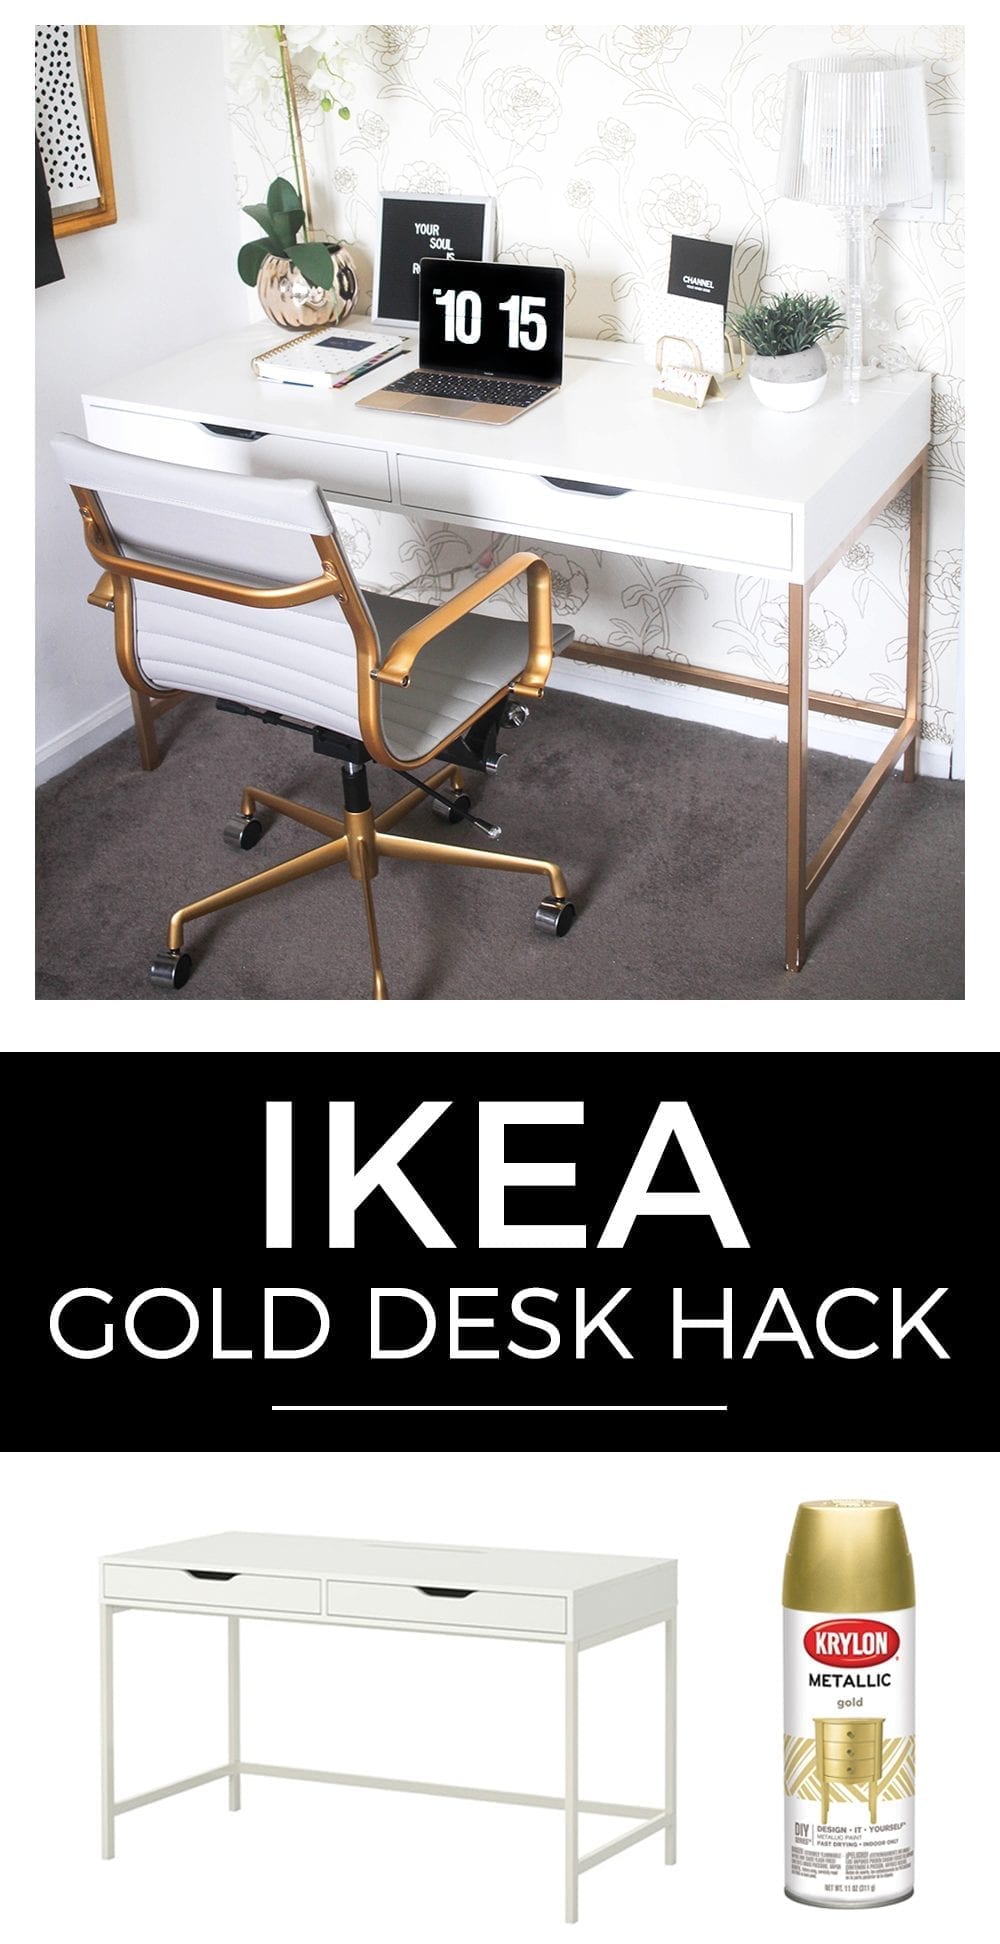 Ikea Gold Desk Hack, White and Gold Desk, Gold Desk, Small Desk Ikea, White Desk Ikea, Gold and White Desk, Desk with Gold Legs, Ikea Computer Desk, White Desk with Gold Legs, Ikea White Desk, Gold Table Legs